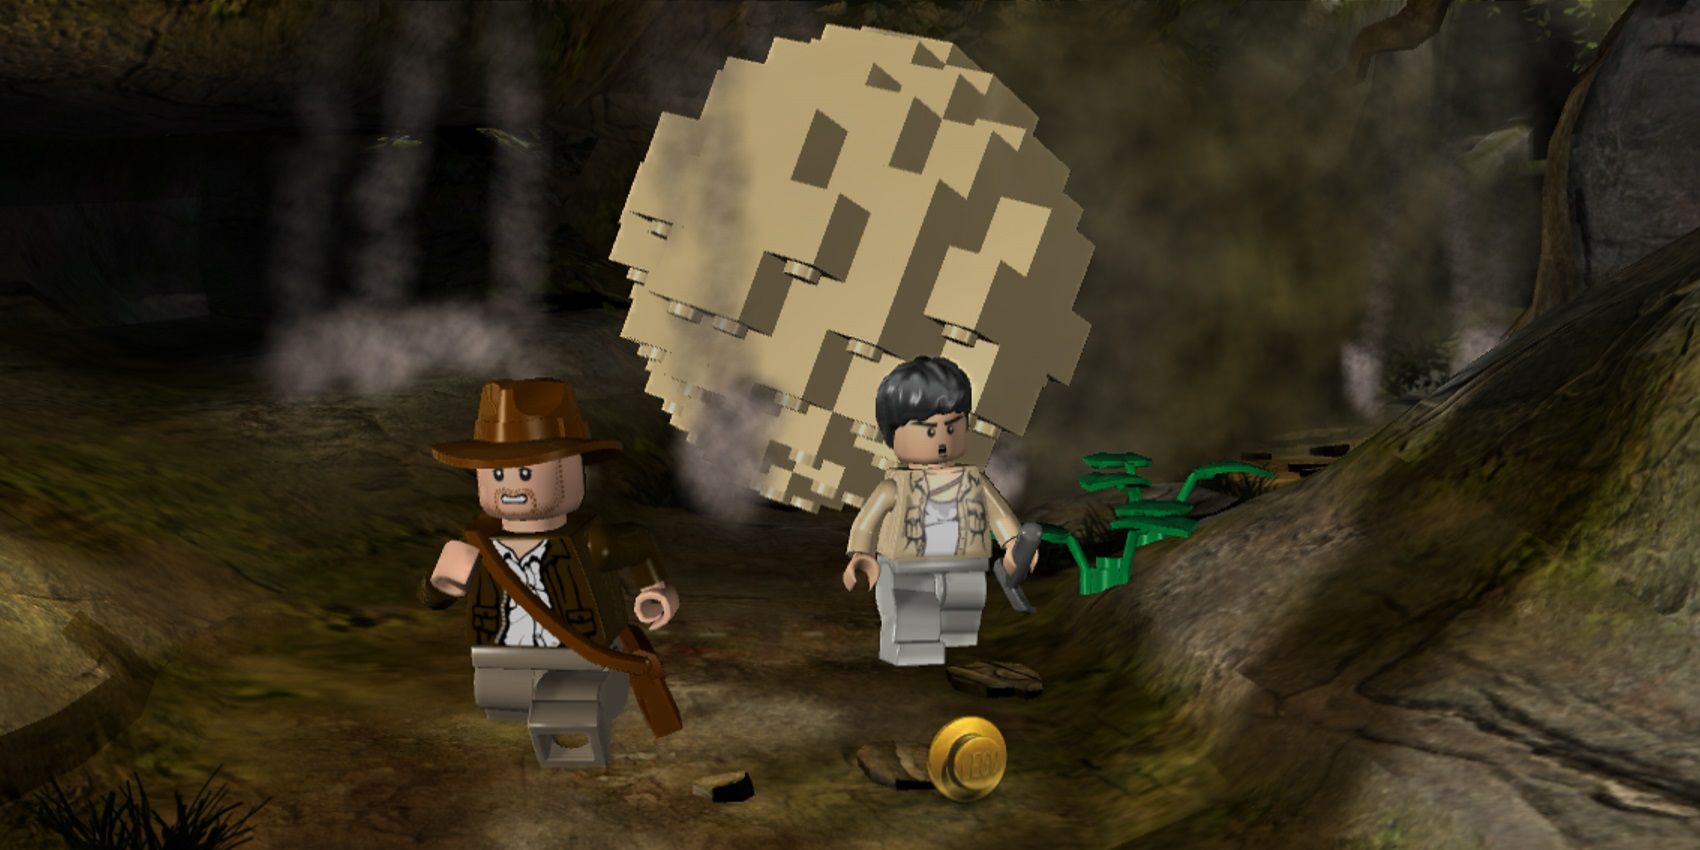 The boulder roll in Lego Indiana Jones